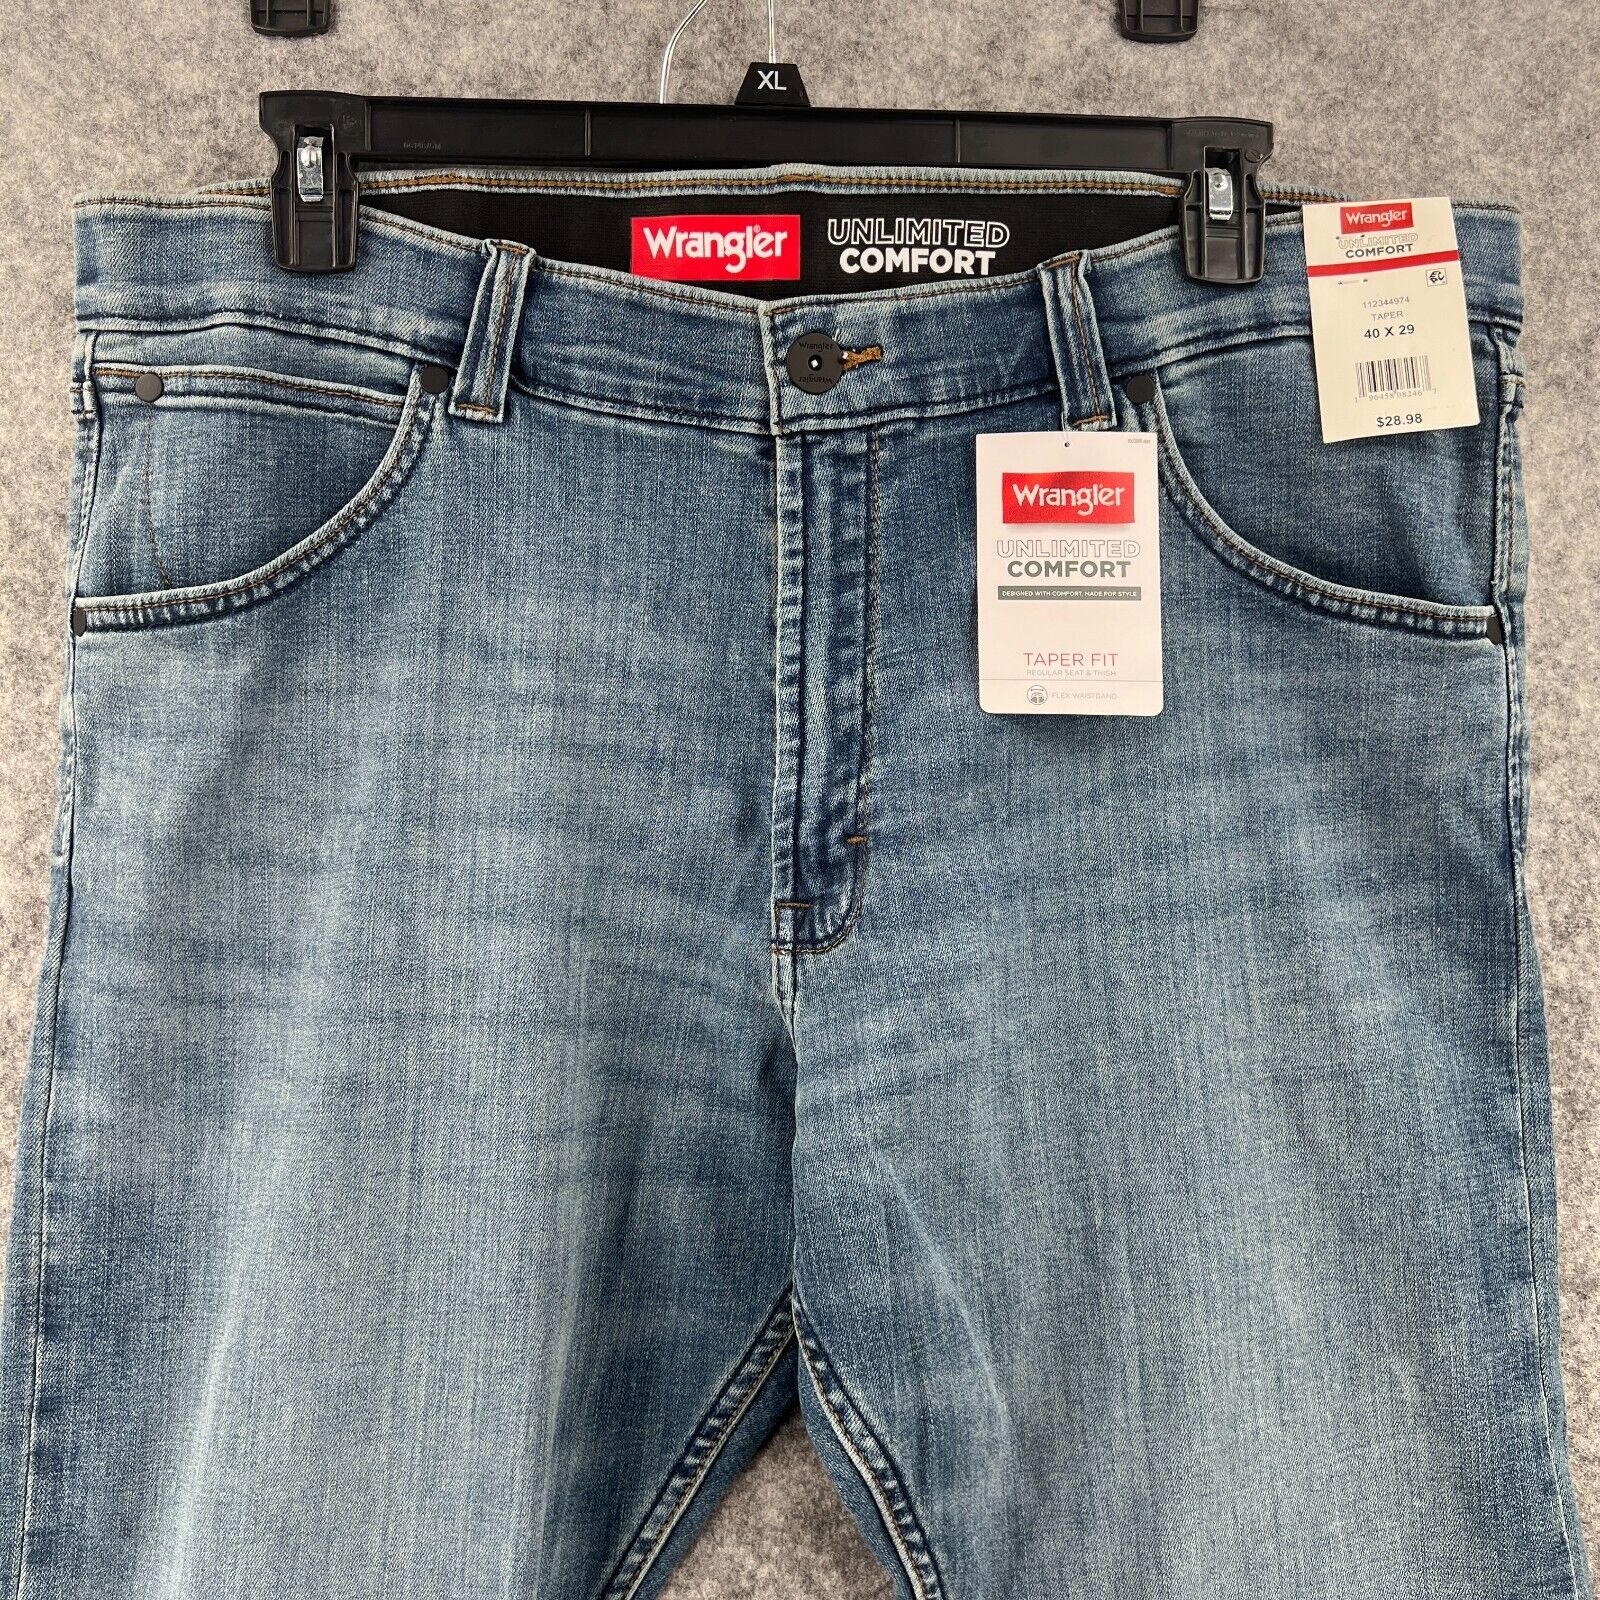 New Wrangler  Mens Blue Unlimited Comfort Flex Jeans Taper Fit Regular 40x29